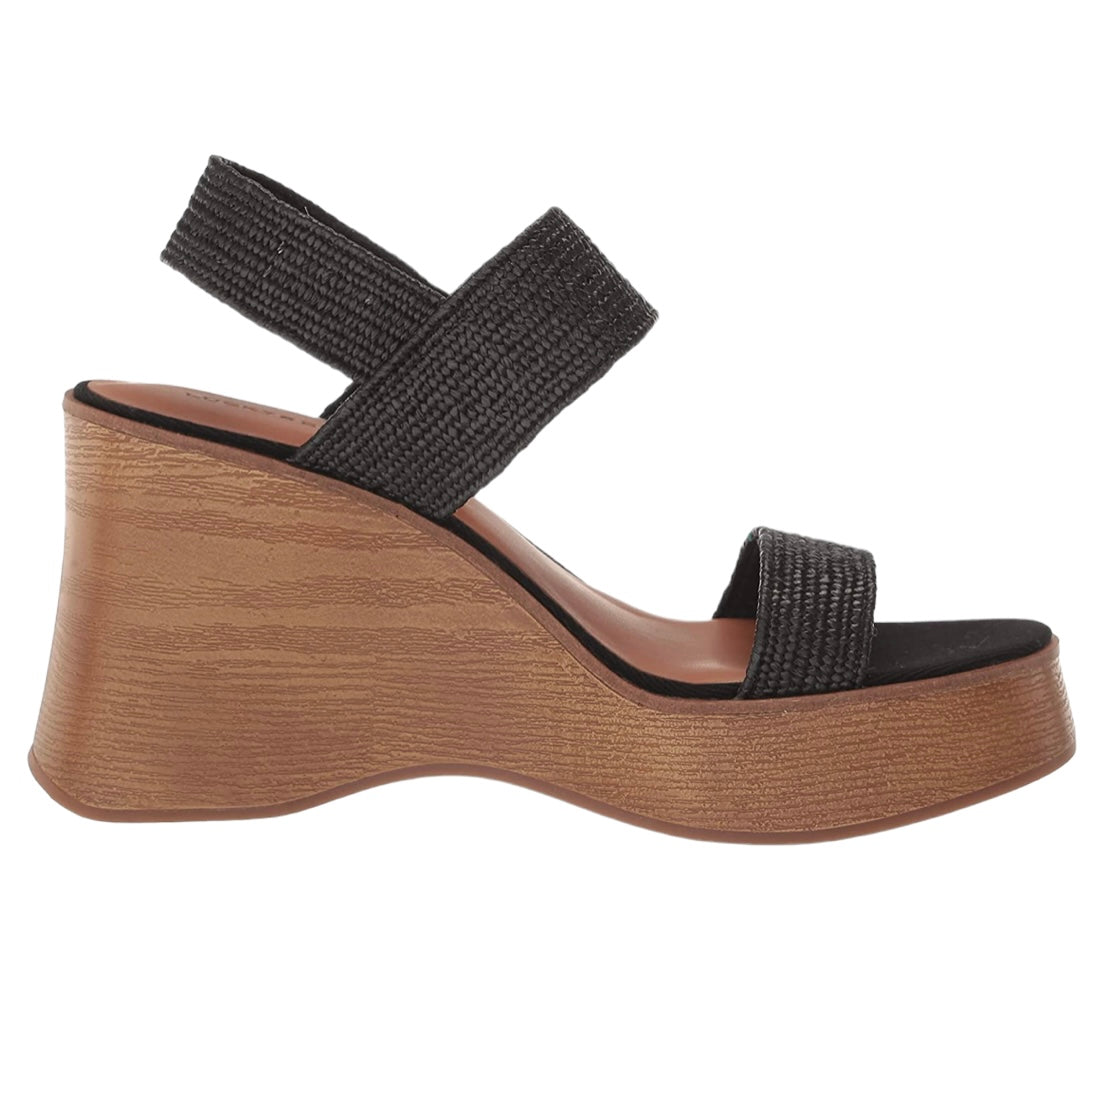 DELUKAH Black Slip On Open Toe Platform Wedge Women's Sandals